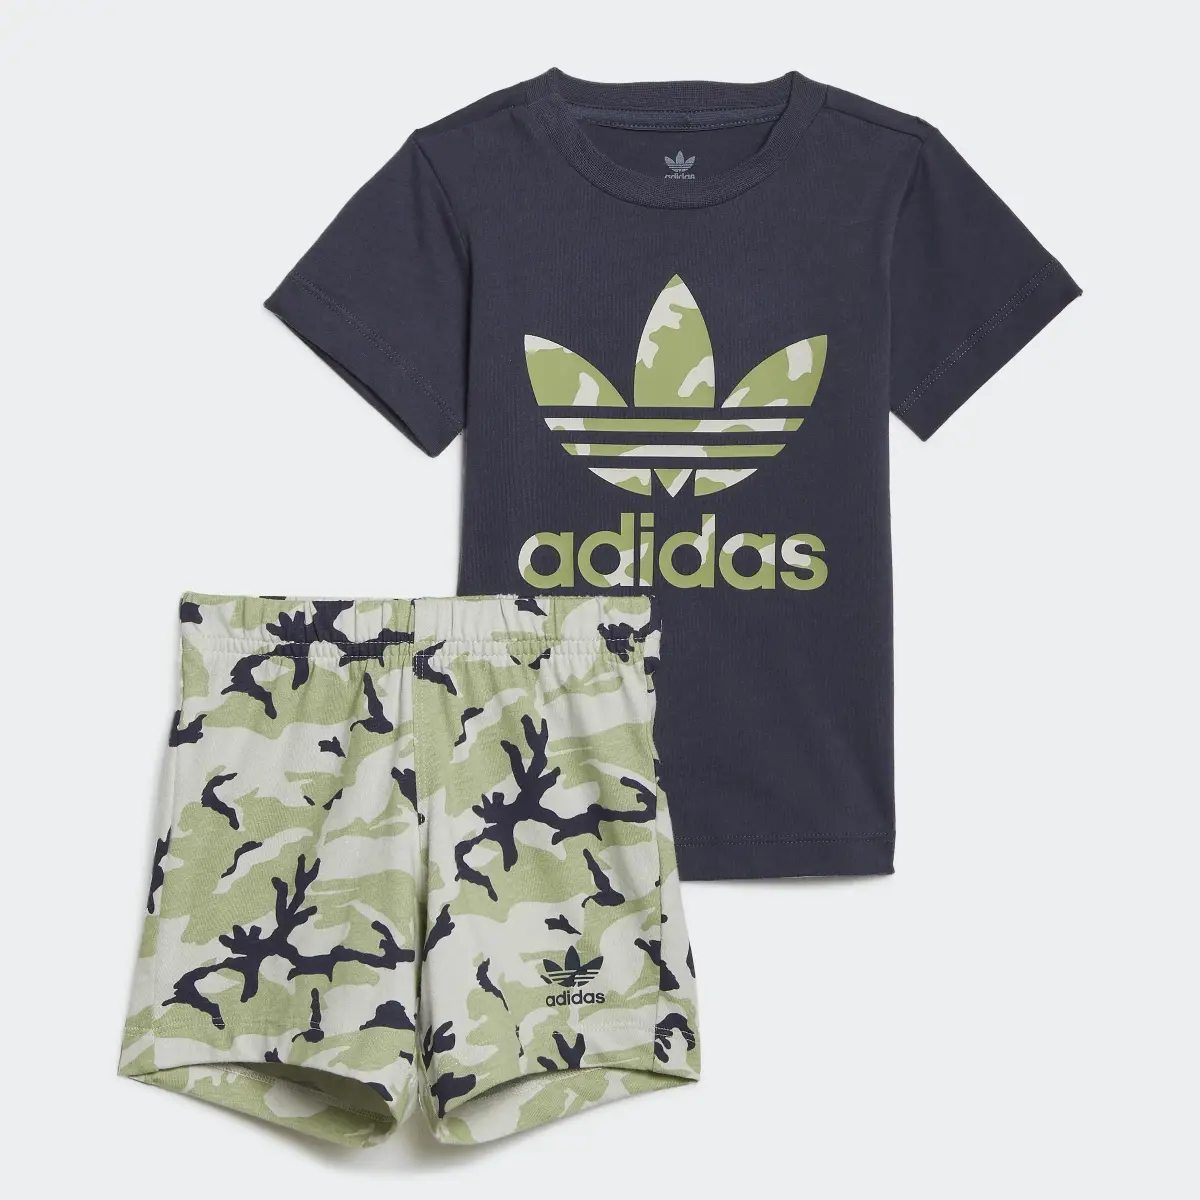 Adidas Camo Shorts and Tee Set. 1